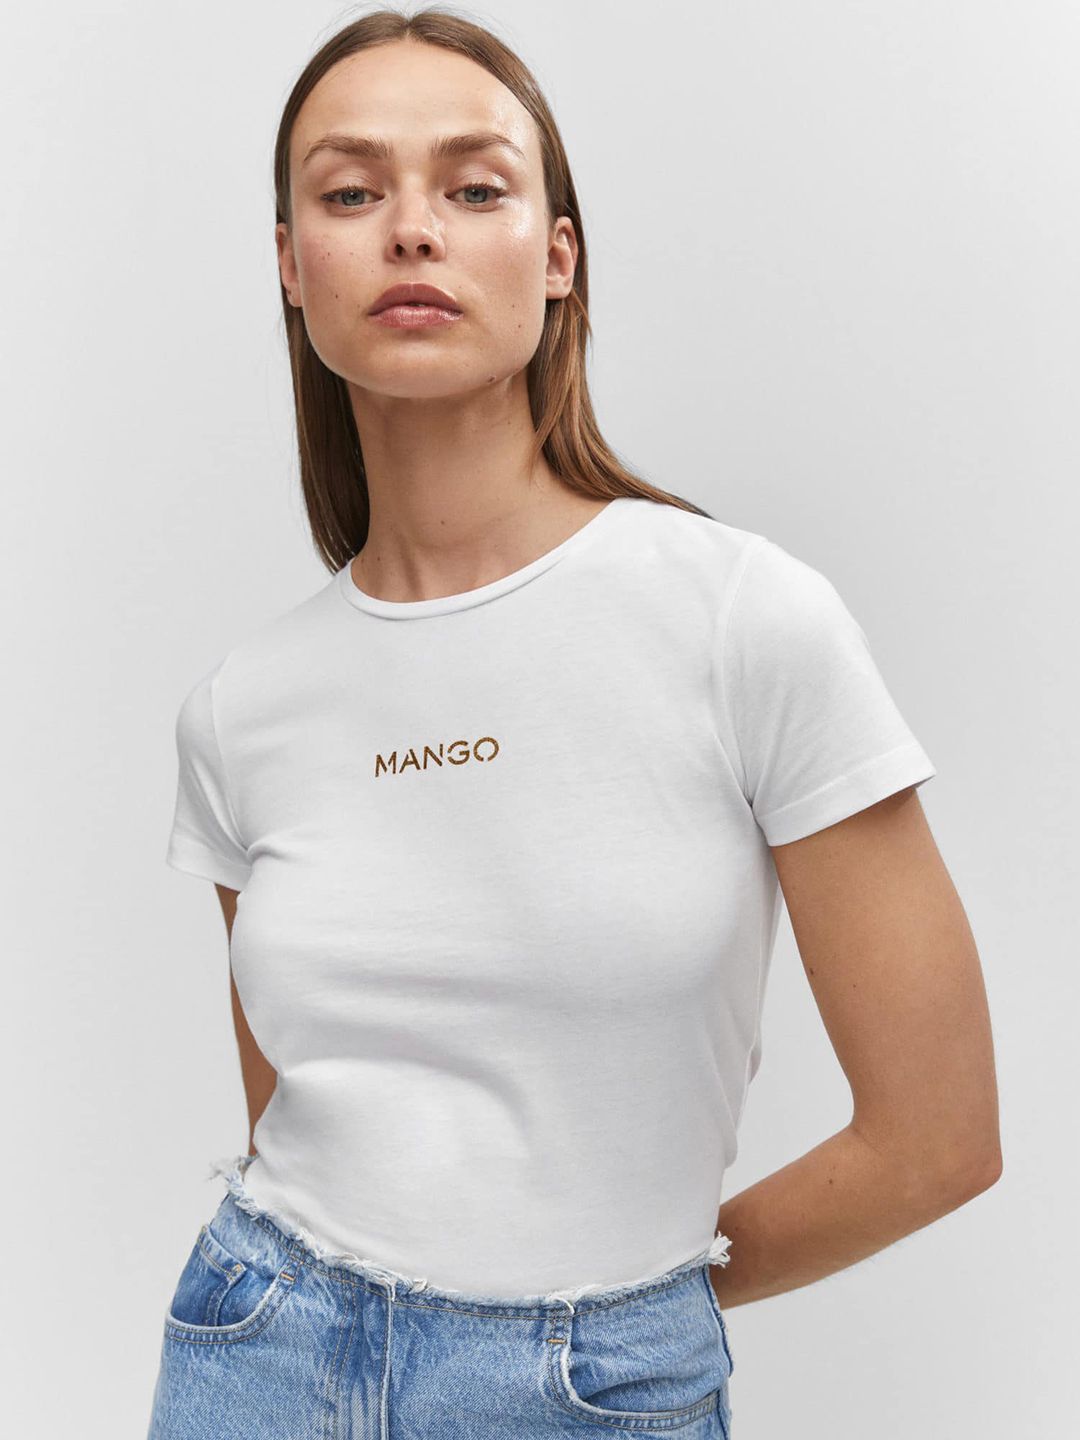 MANGO Brand Logo Printed Pure Cotton T-shirt Price in India